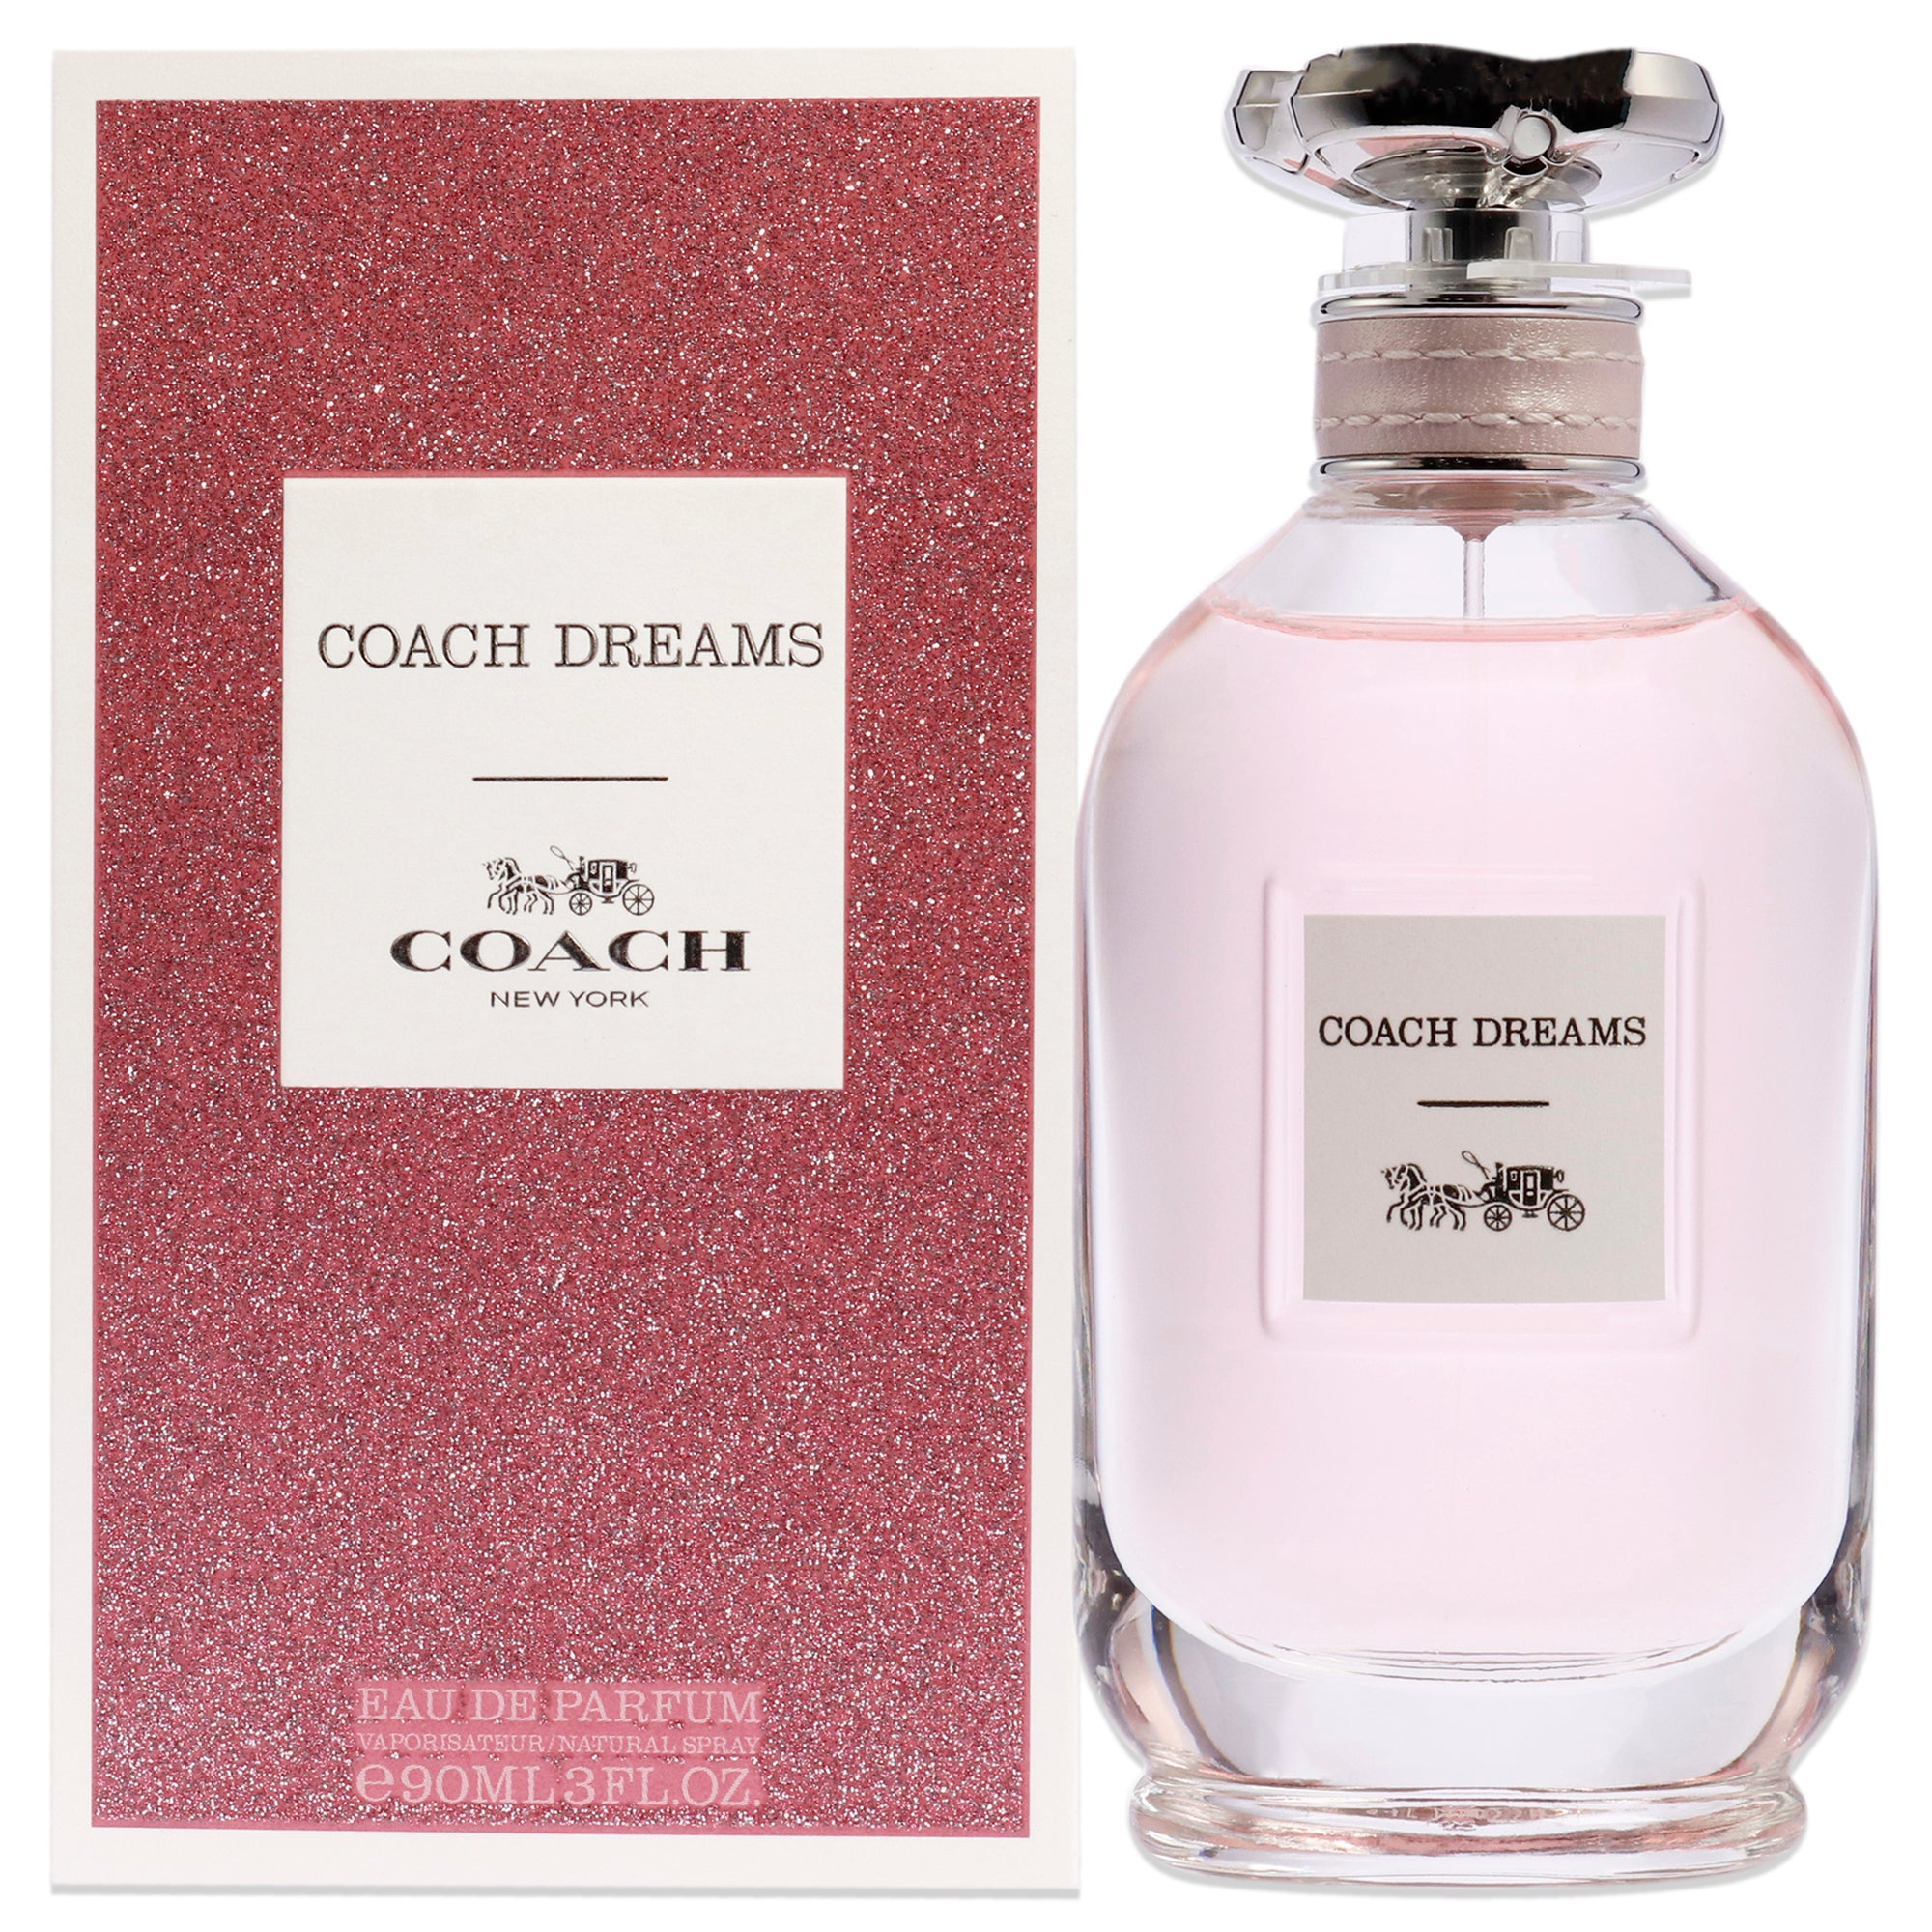 Coach Dreams by Coach for Women - 3 oz EDP Spray